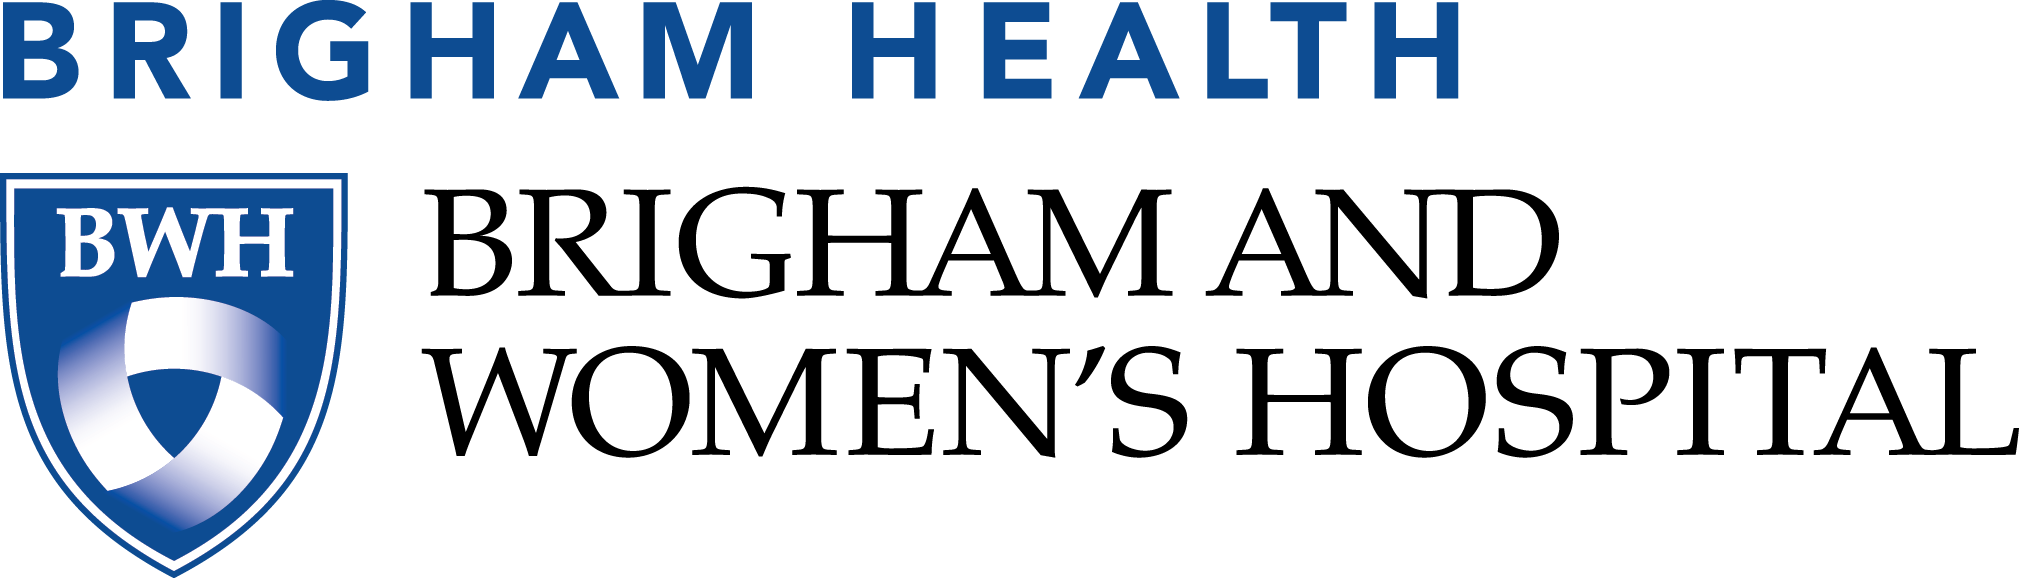 Brigham Health Brigham and Women's Hospital Logotipo